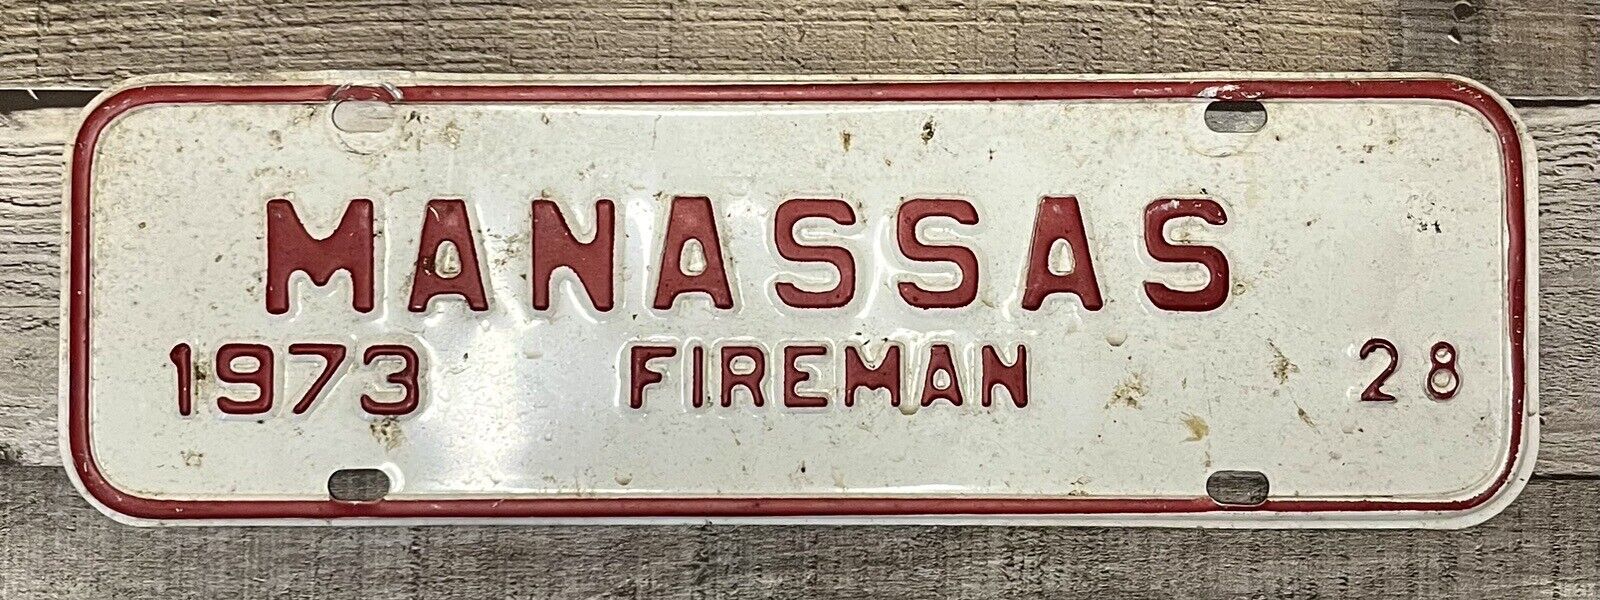 1973 Manassas Virginia Fireman License Plate Town Tag Topper Retro Firefighter